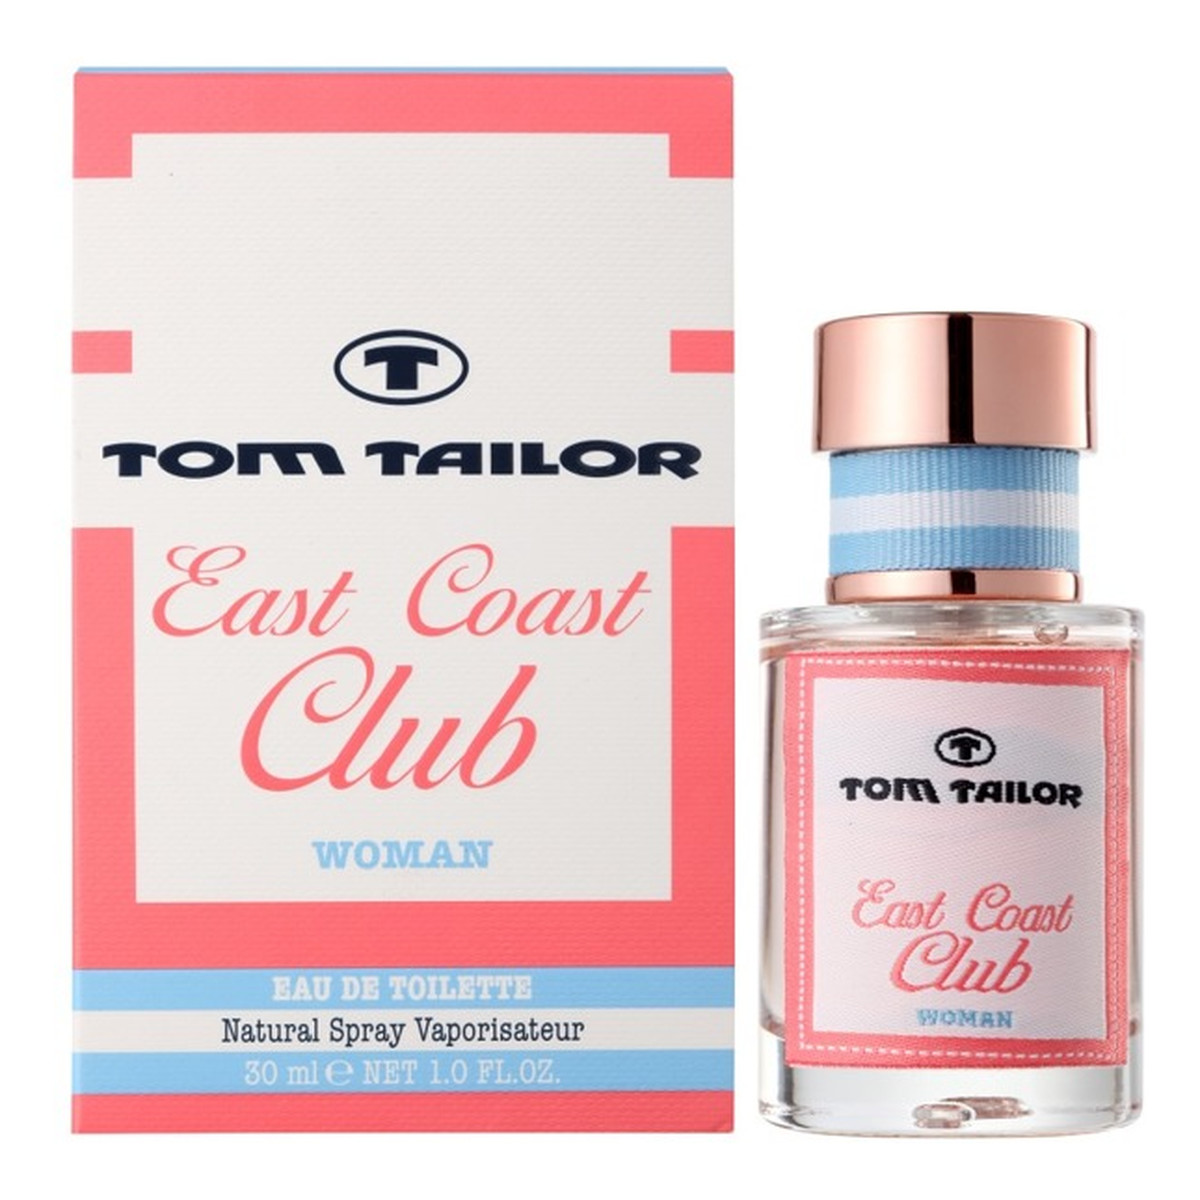 Tom Tailor East Coast Club Woman woda toaletowa 30ml